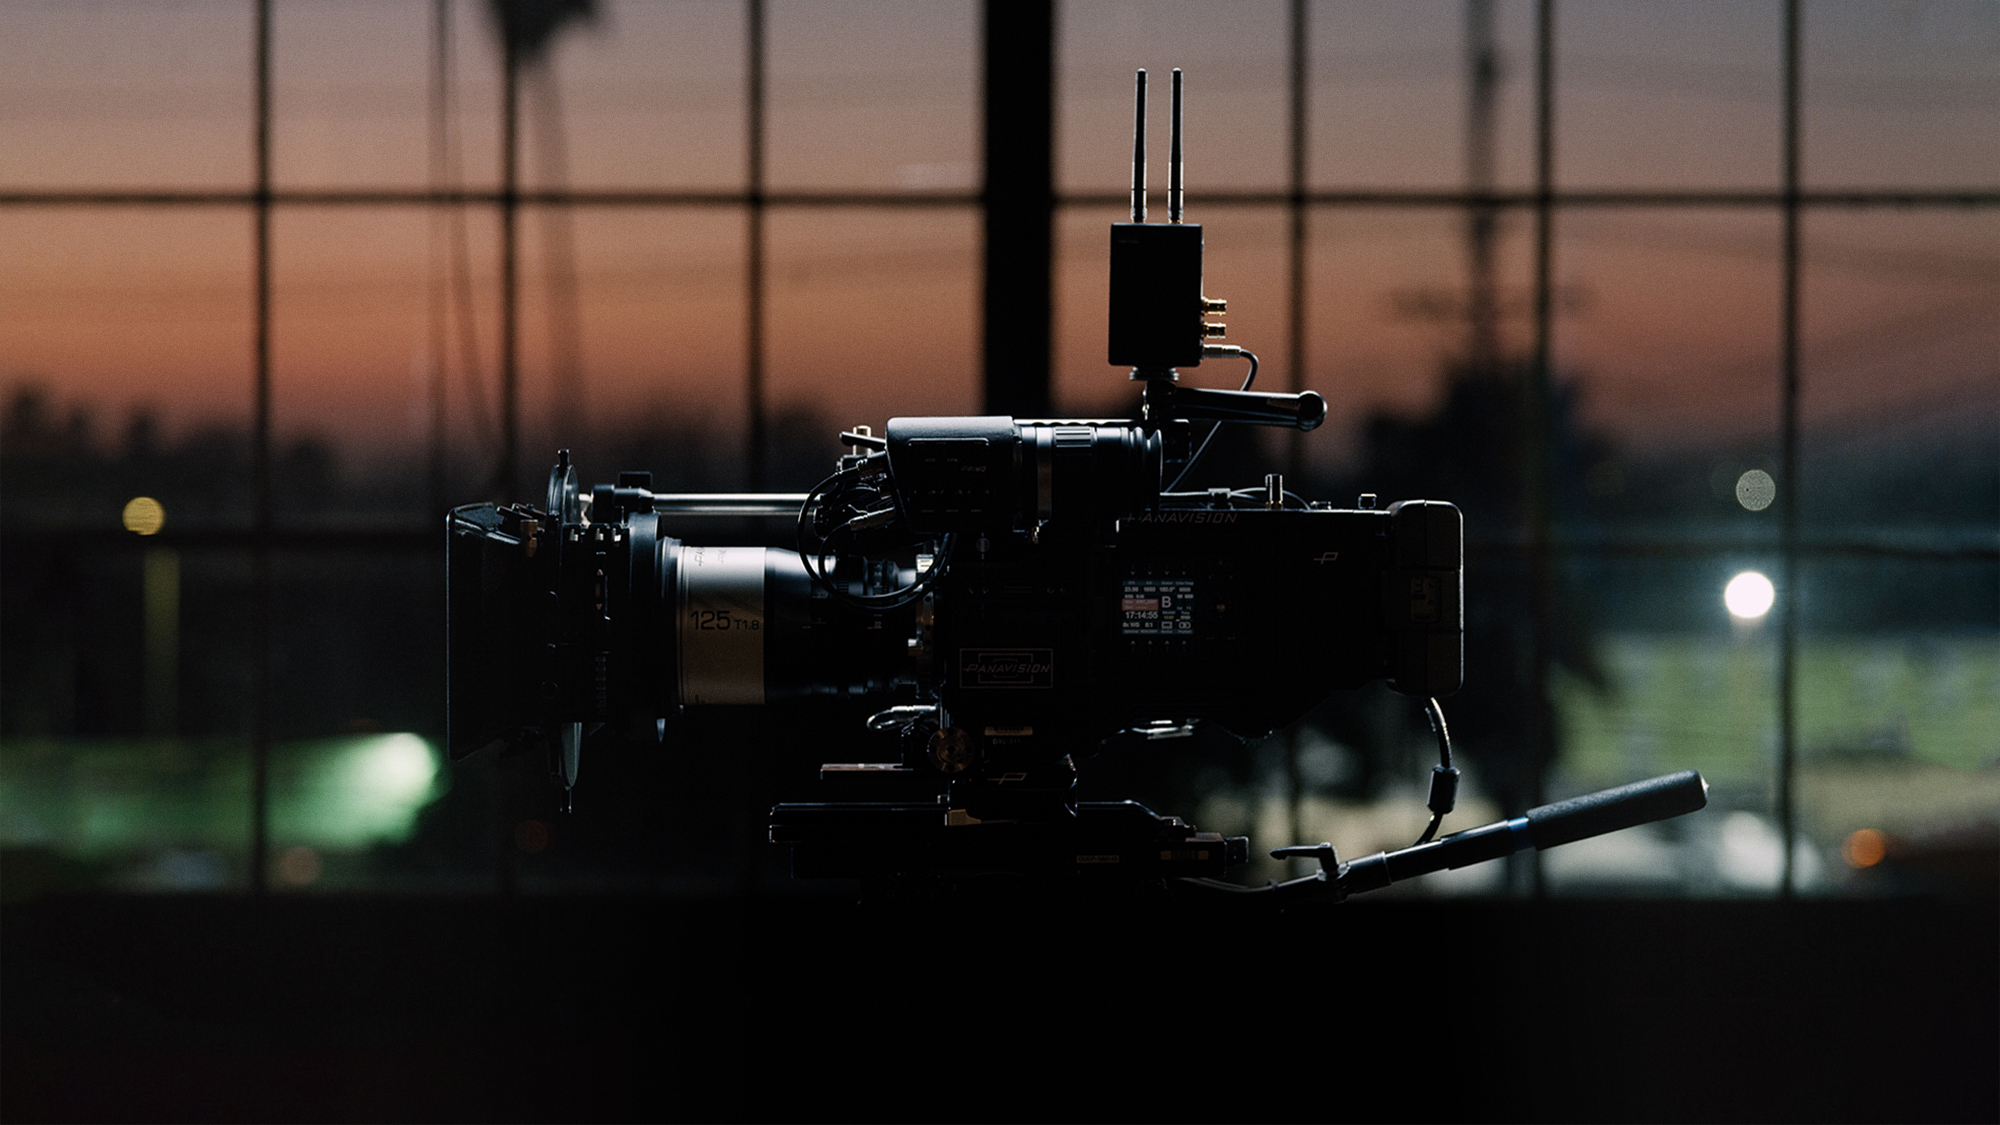 Panavision broadcast camera in silhouette